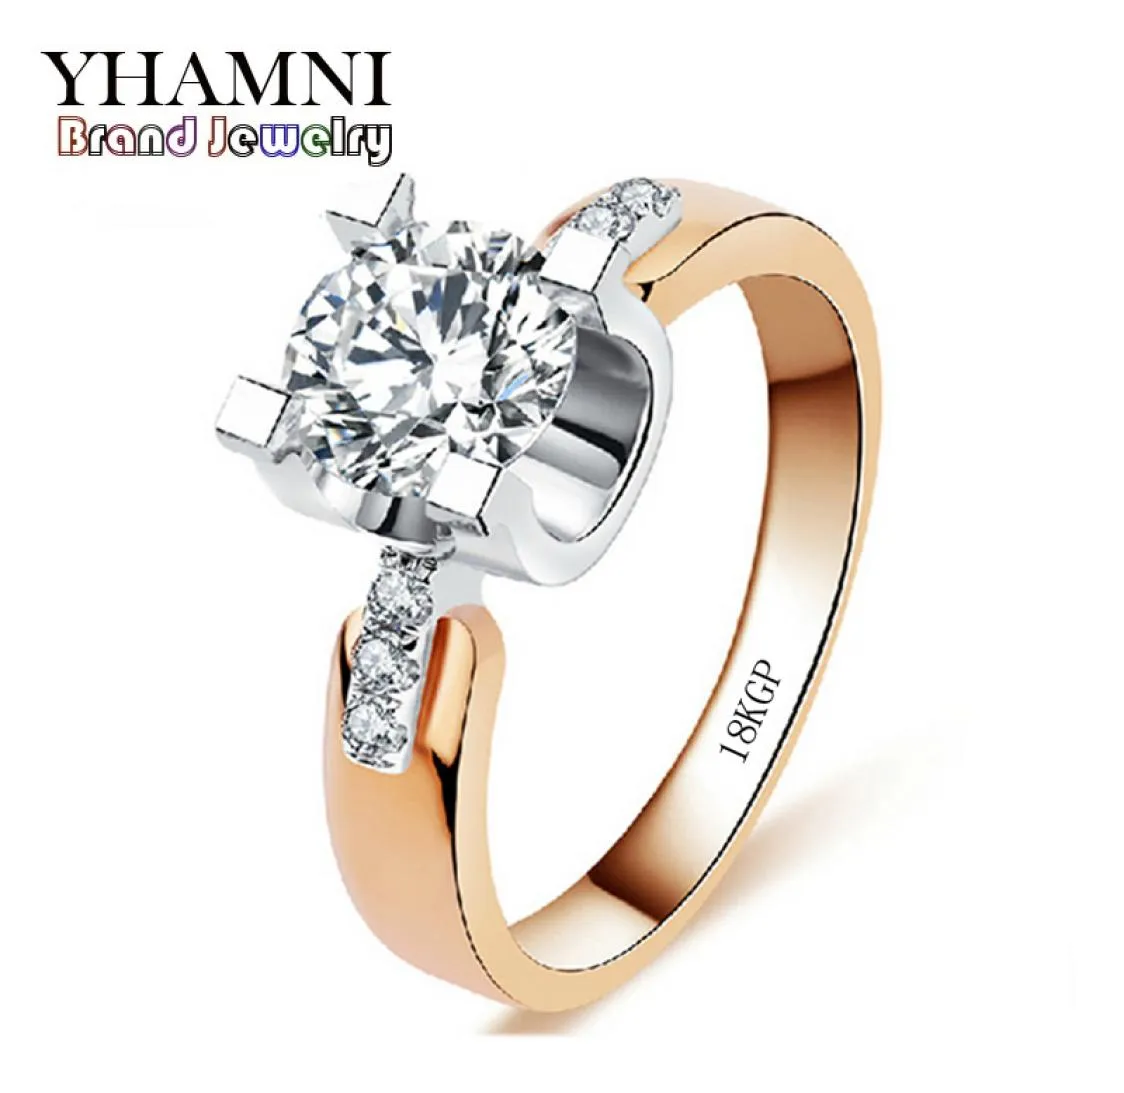 Yhamni Brand Jewelry Have 18kgp Stamp Ring Gold Set 1 Carat 5a Sona Diamond Engagement Wedding Rings for Women 18kr0153265418